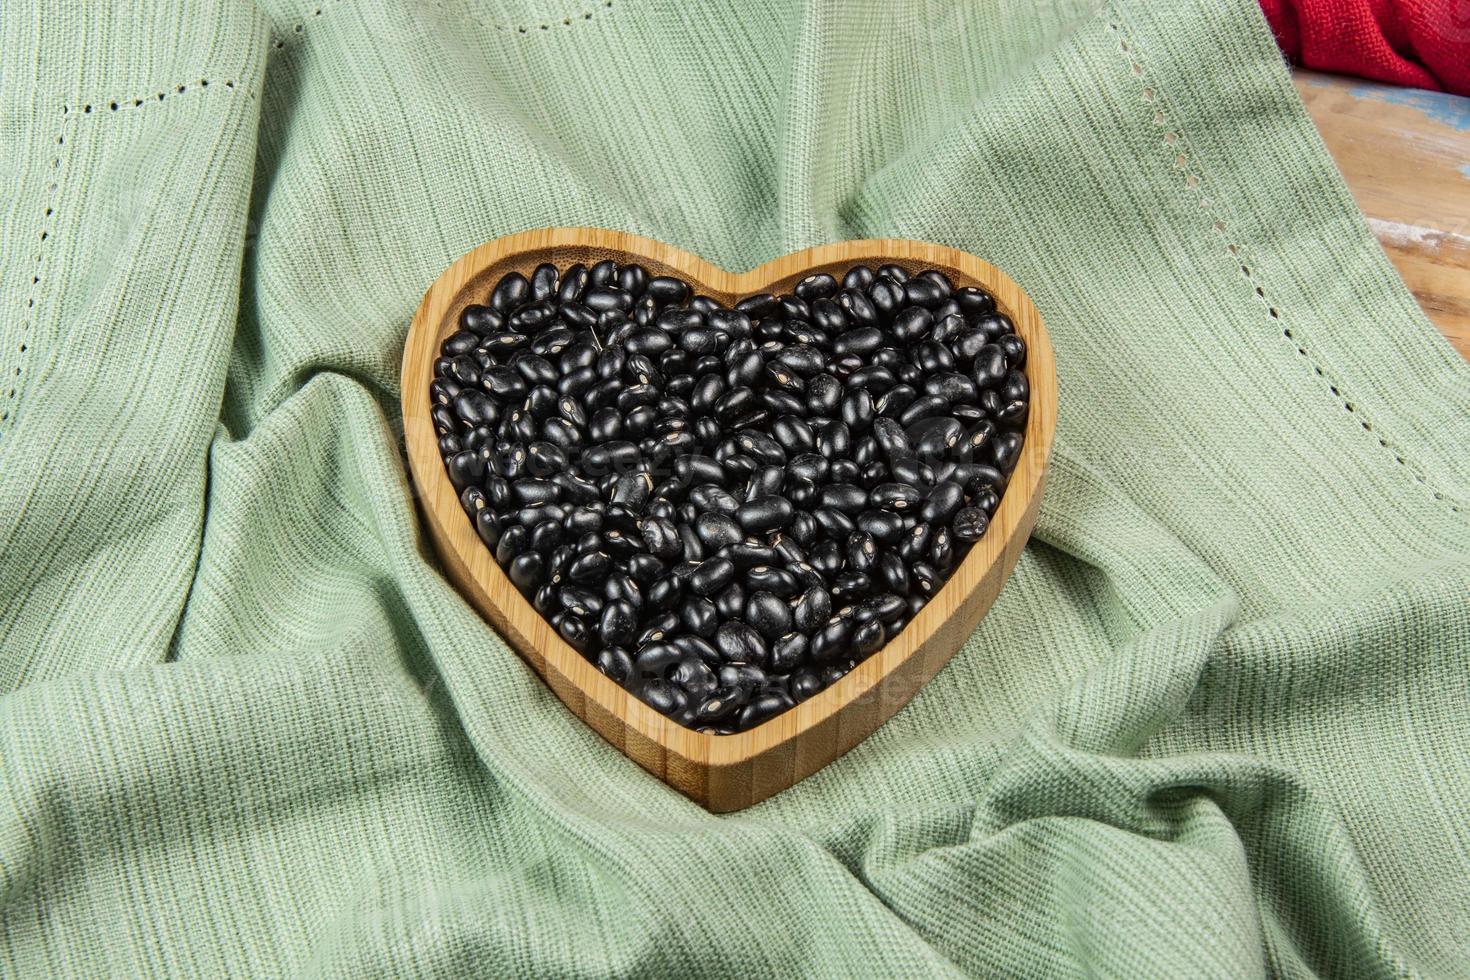 heart shaped black bean bowl on green tablecloth photo